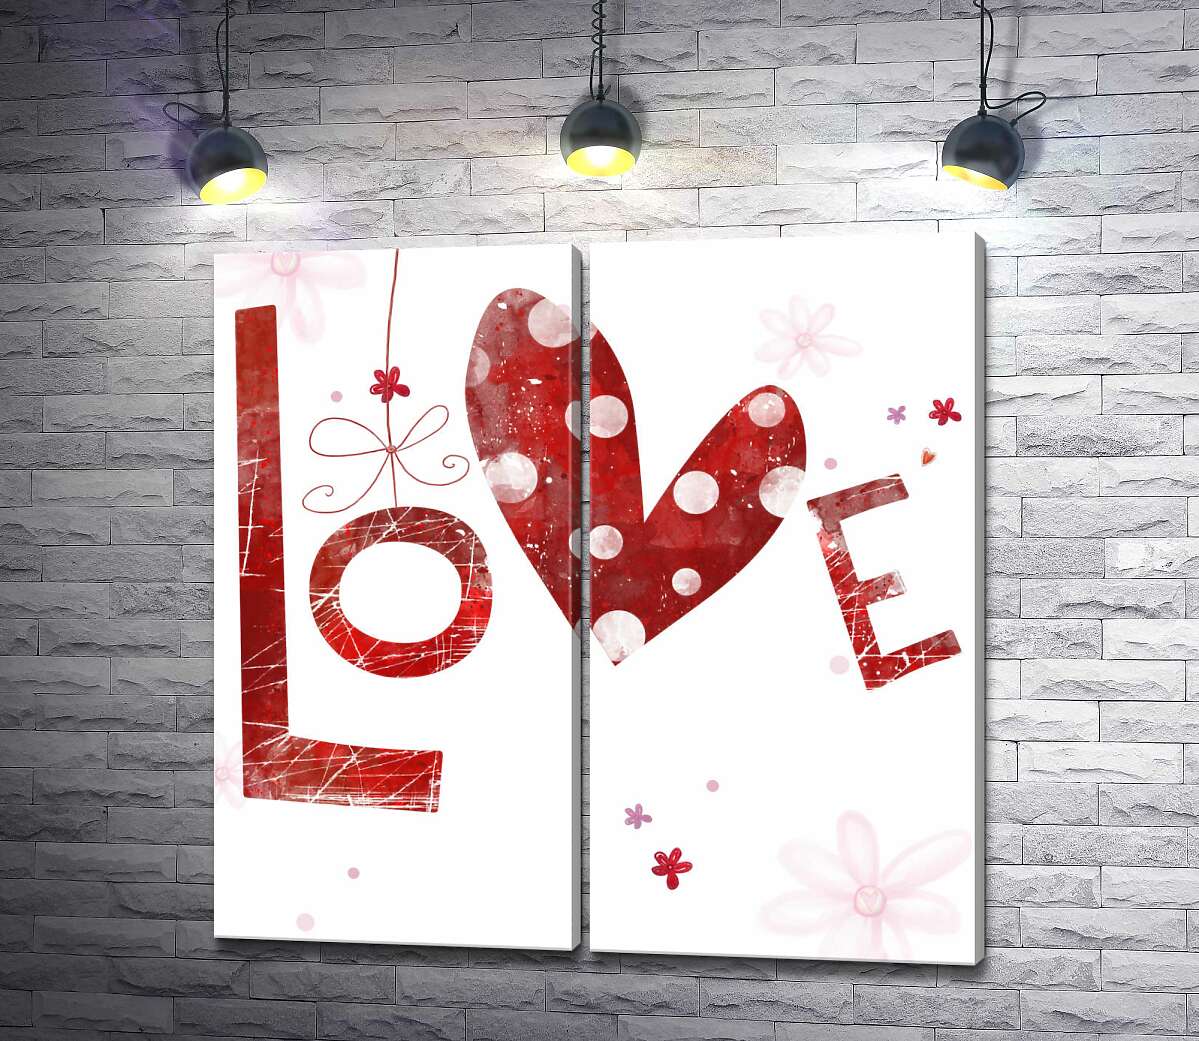 модульна картина Плямисте сердечко прикрашає напис "love"